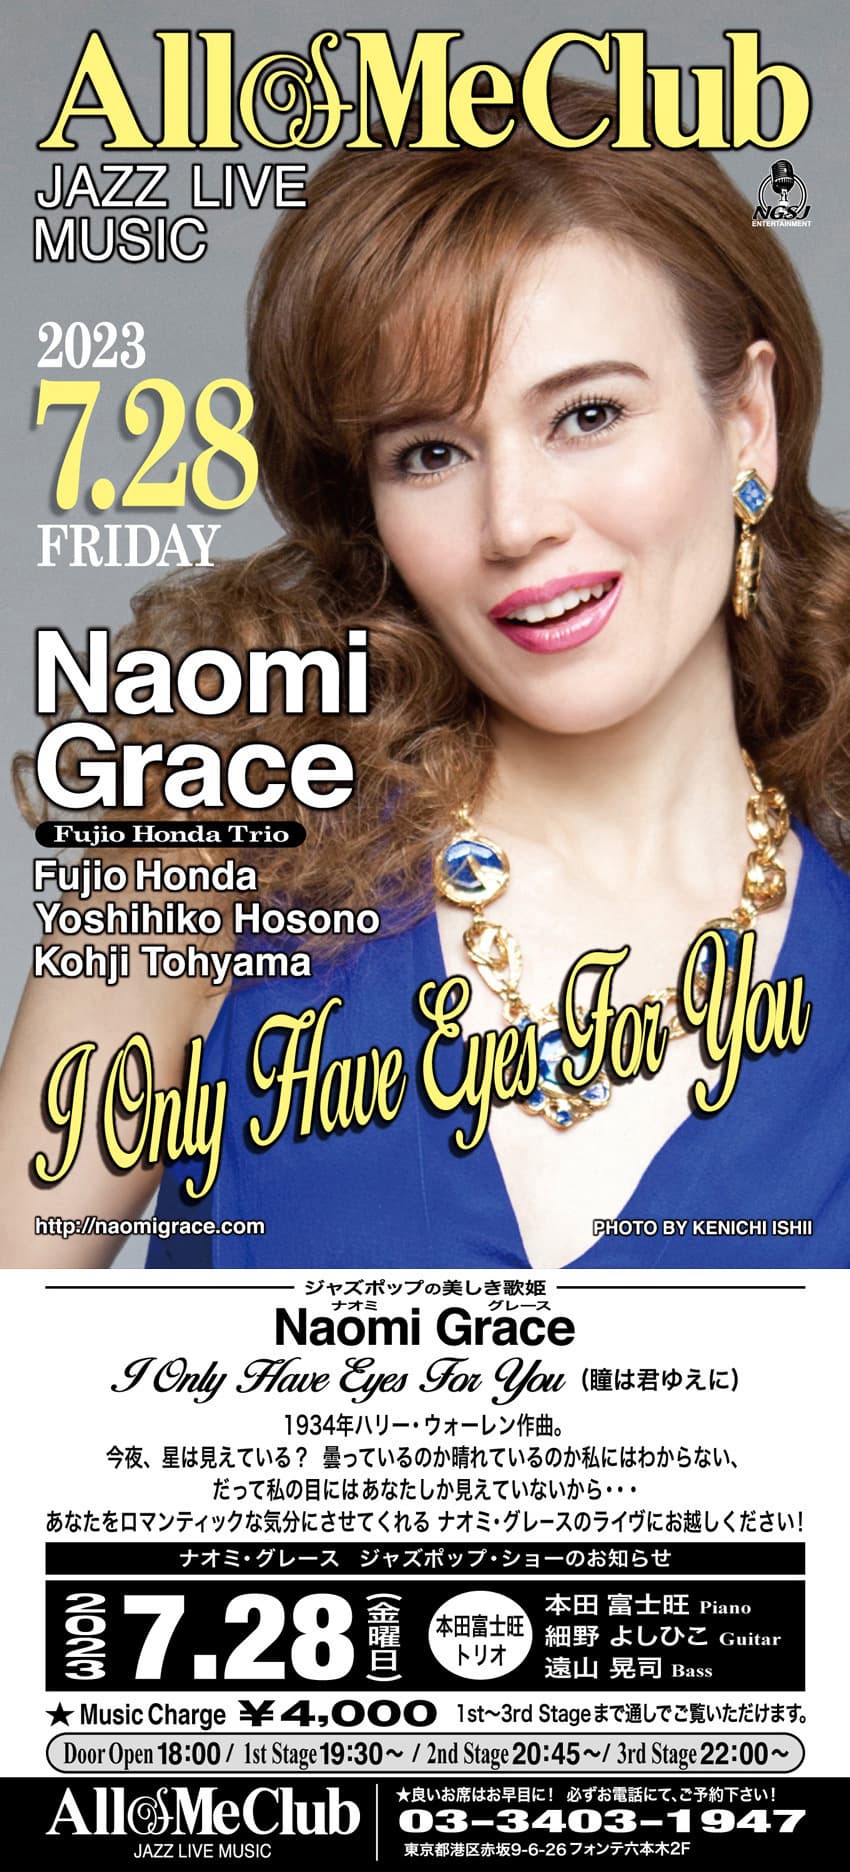 NaomiGrace Official WebSite